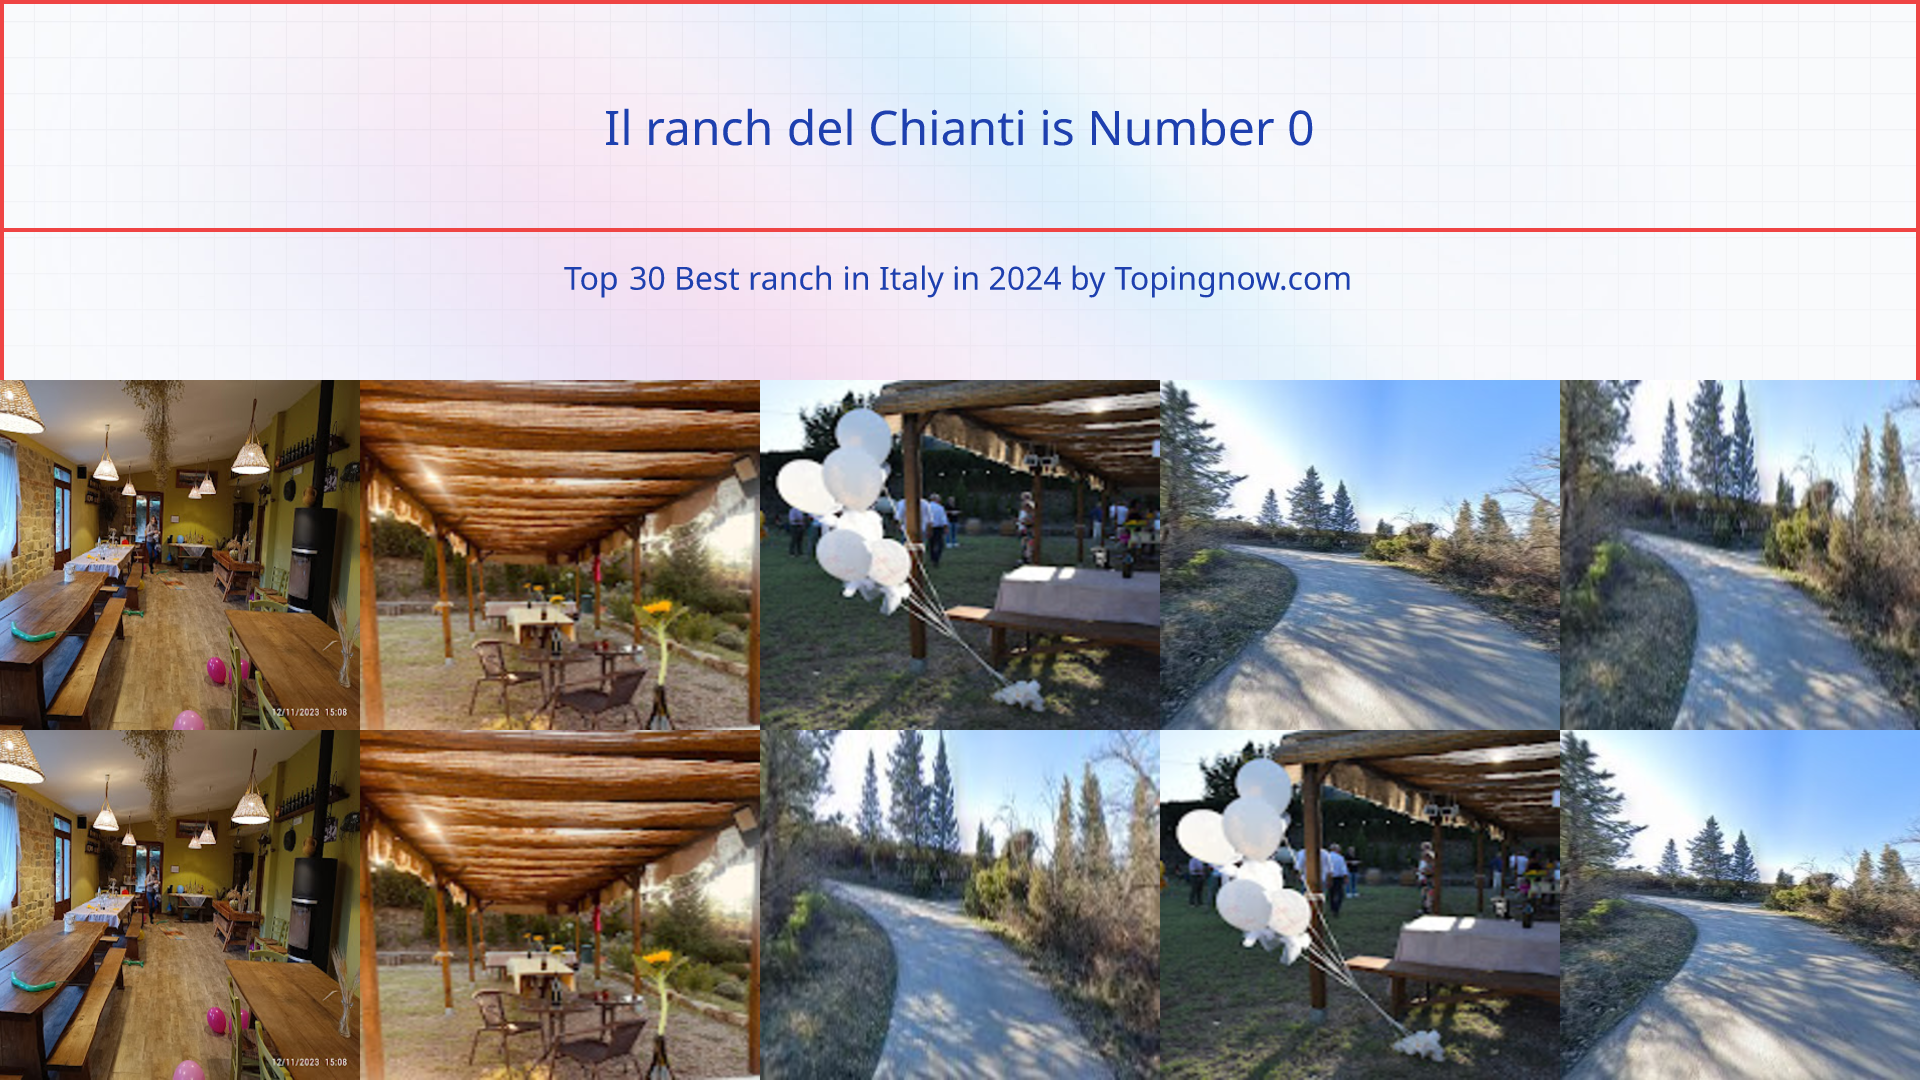 Il ranch del Chianti: Top 30 Best ranch in Italy in 2024